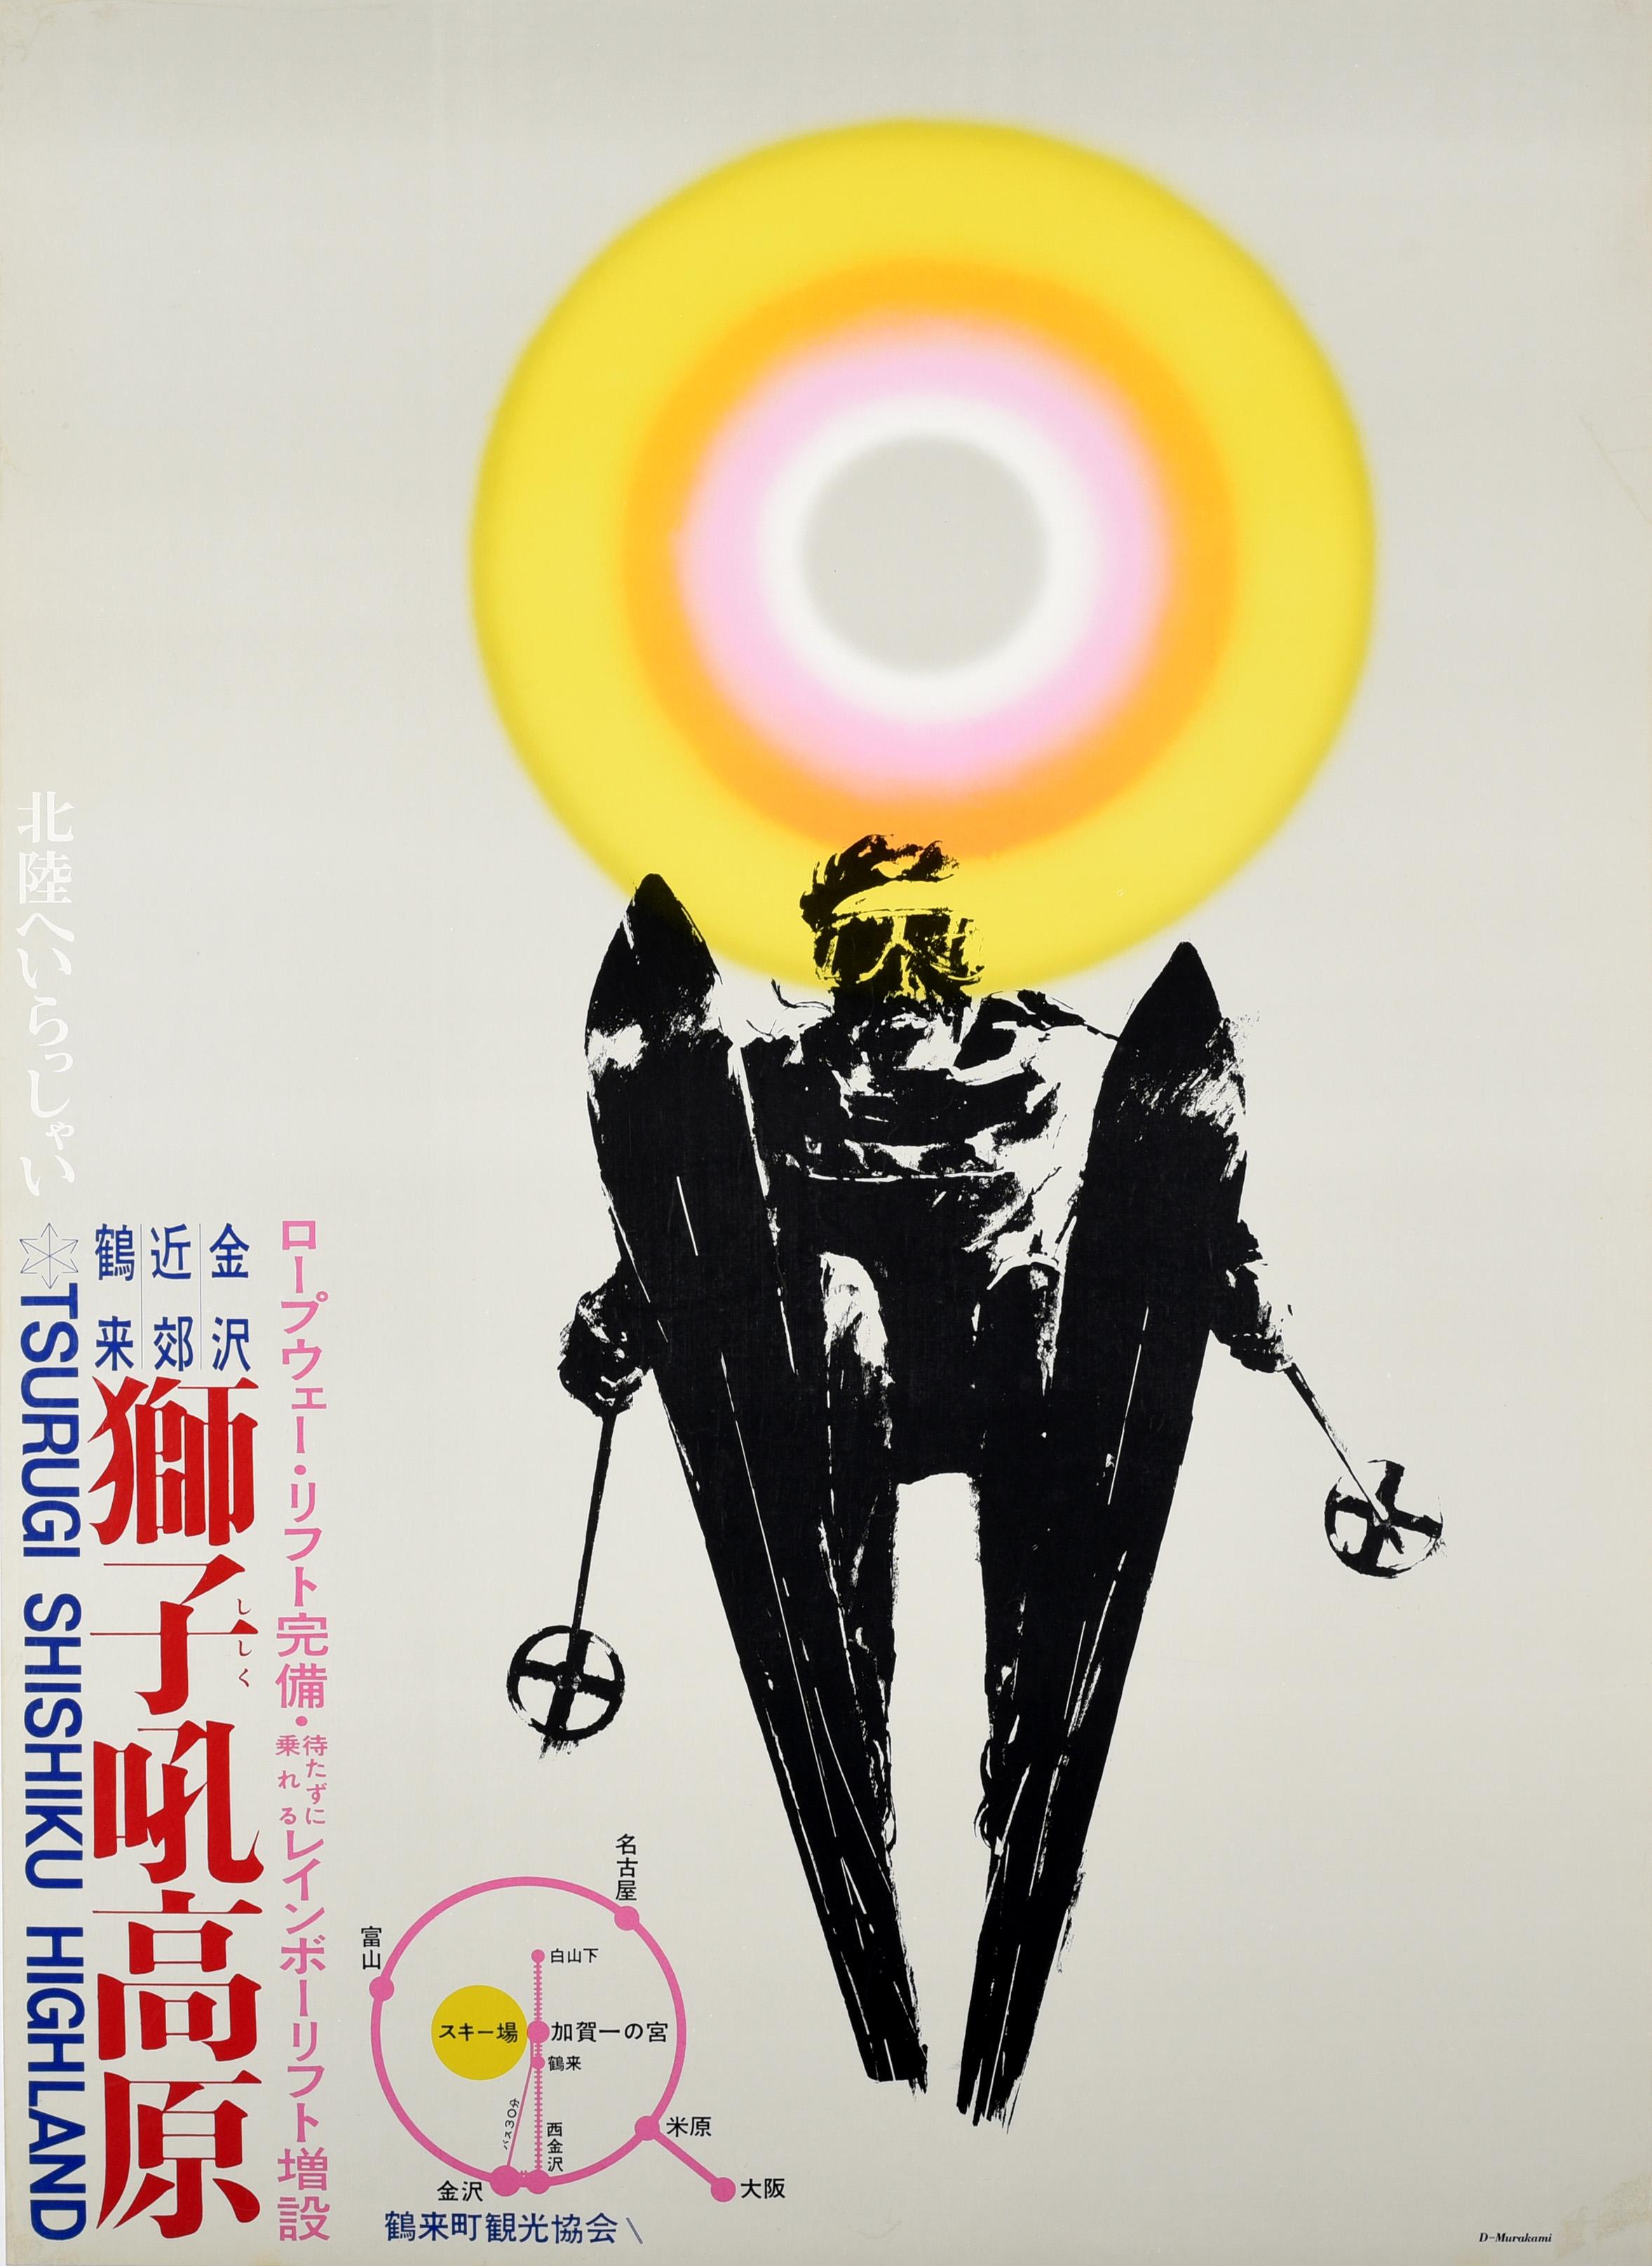 D Murakami Print - Original Vintage Winter Sport Poster Tsurugi Shishiku Highland Skiing Travel Art